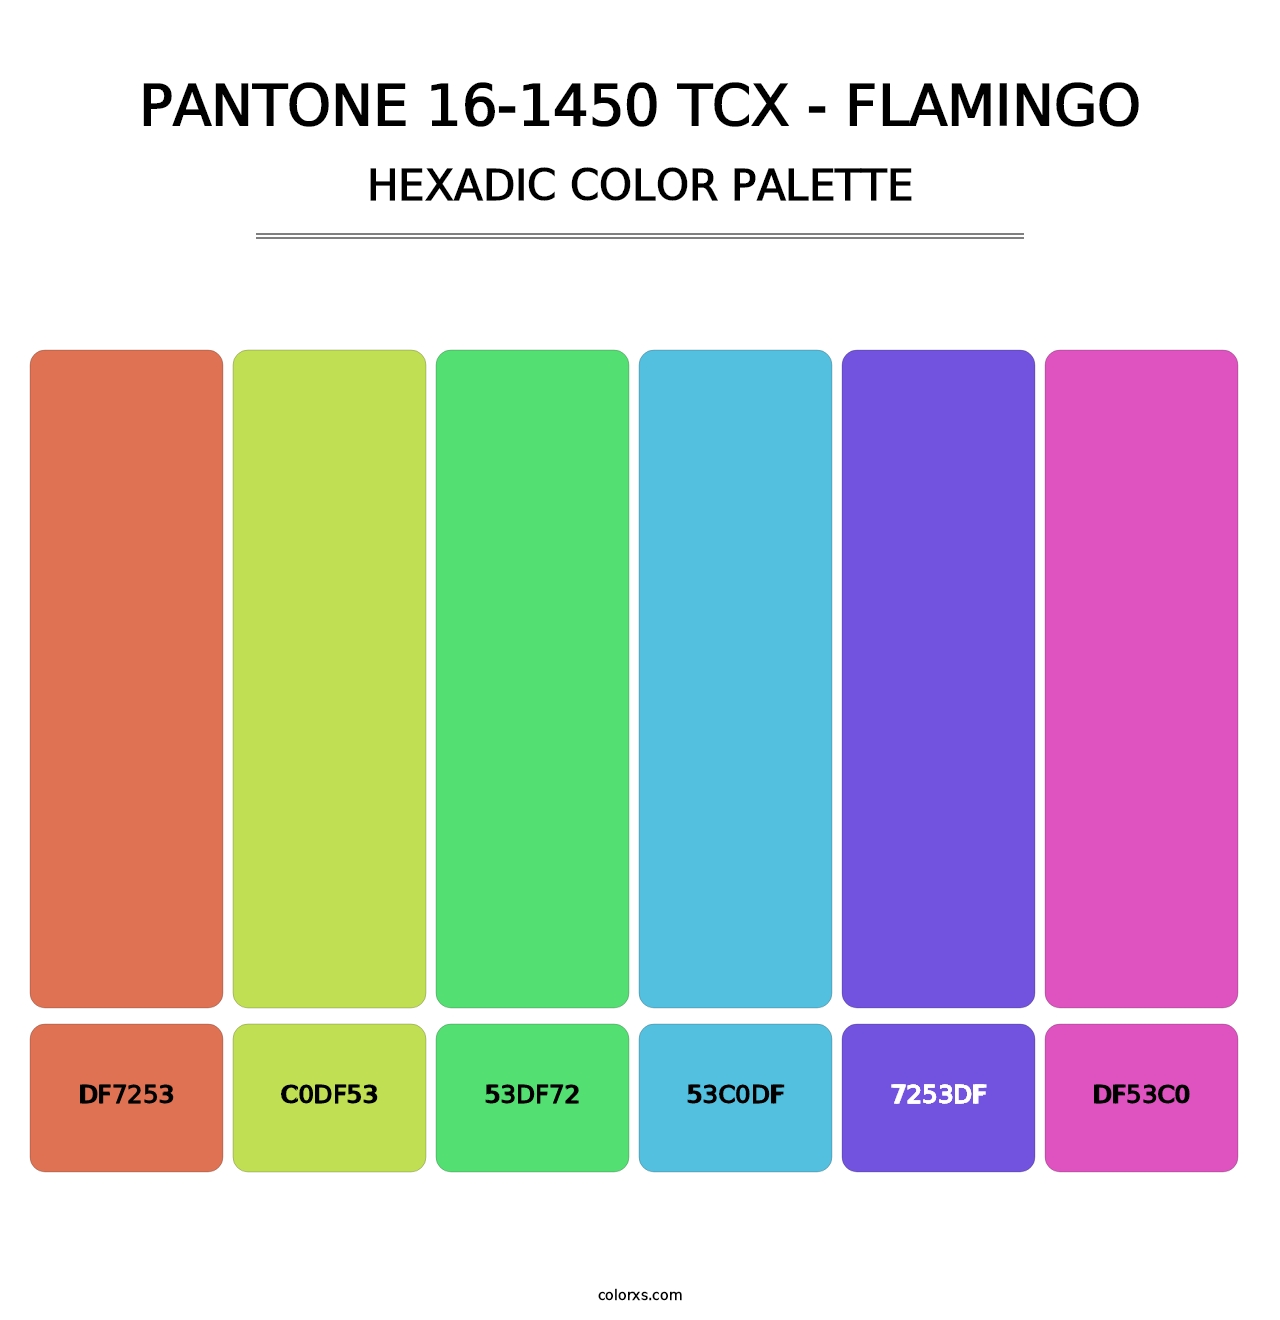 PANTONE 16-1450 TCX - Flamingo - Hexadic Color Palette